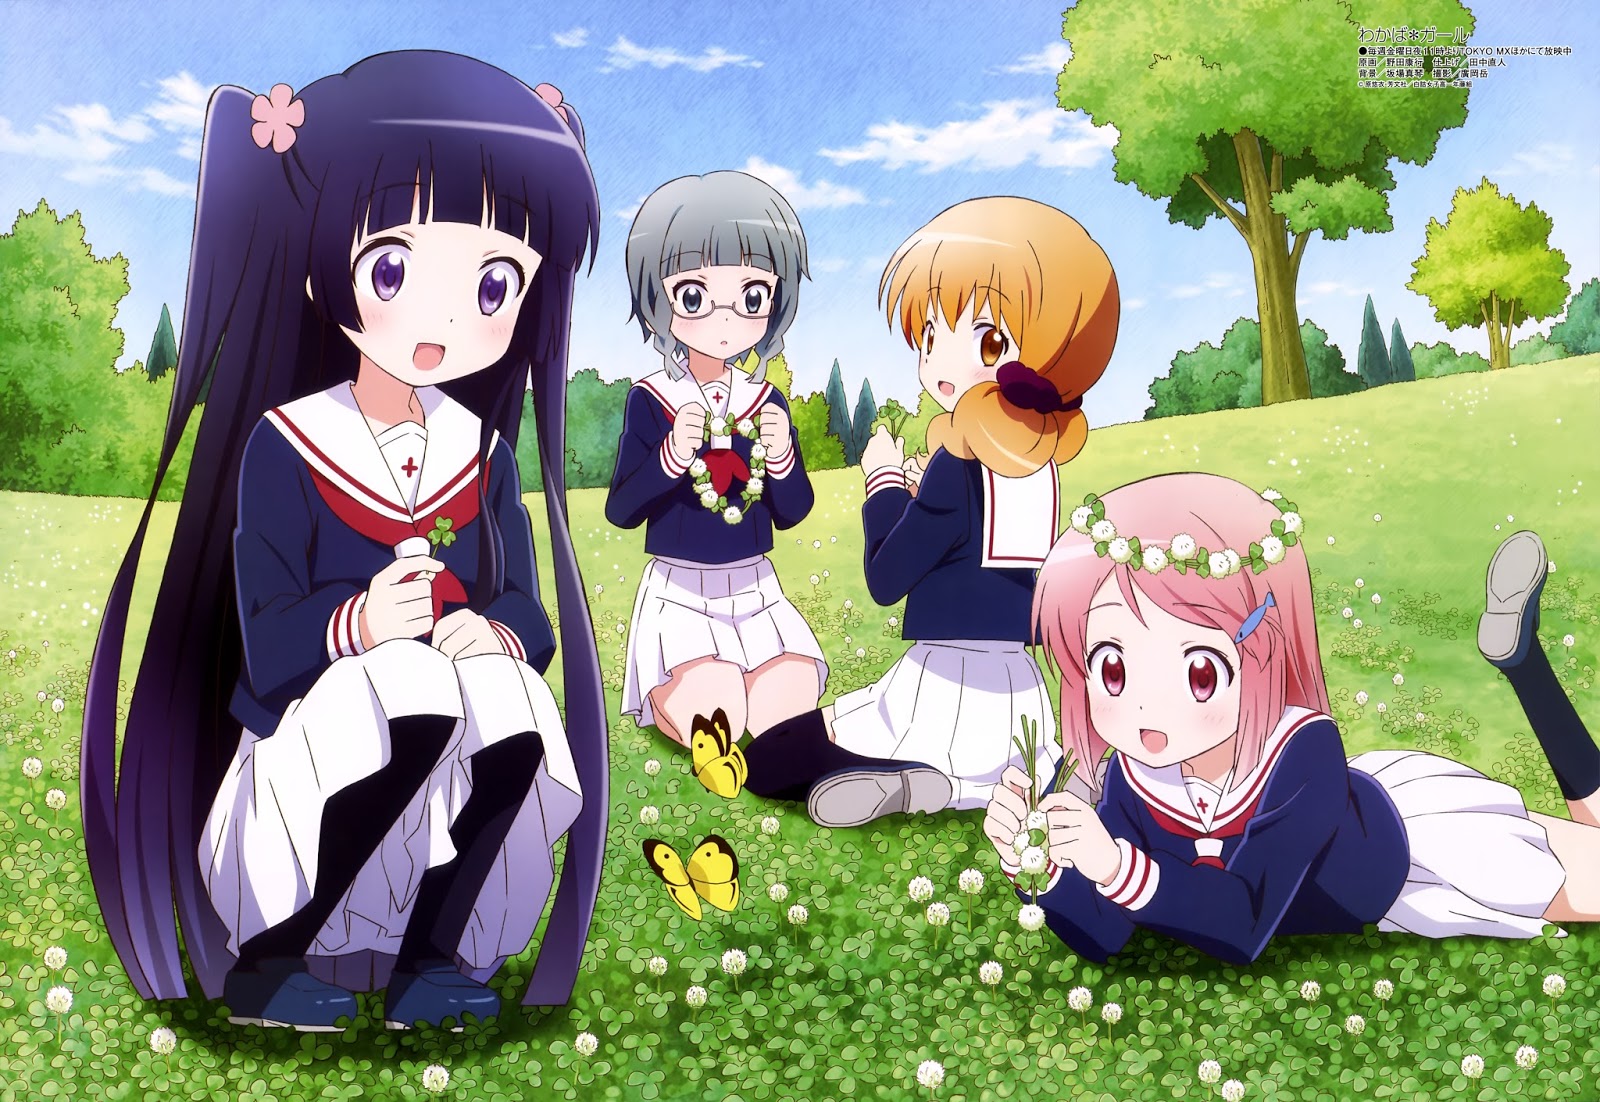 OTAKU CLUB: Summer 2015 anime review